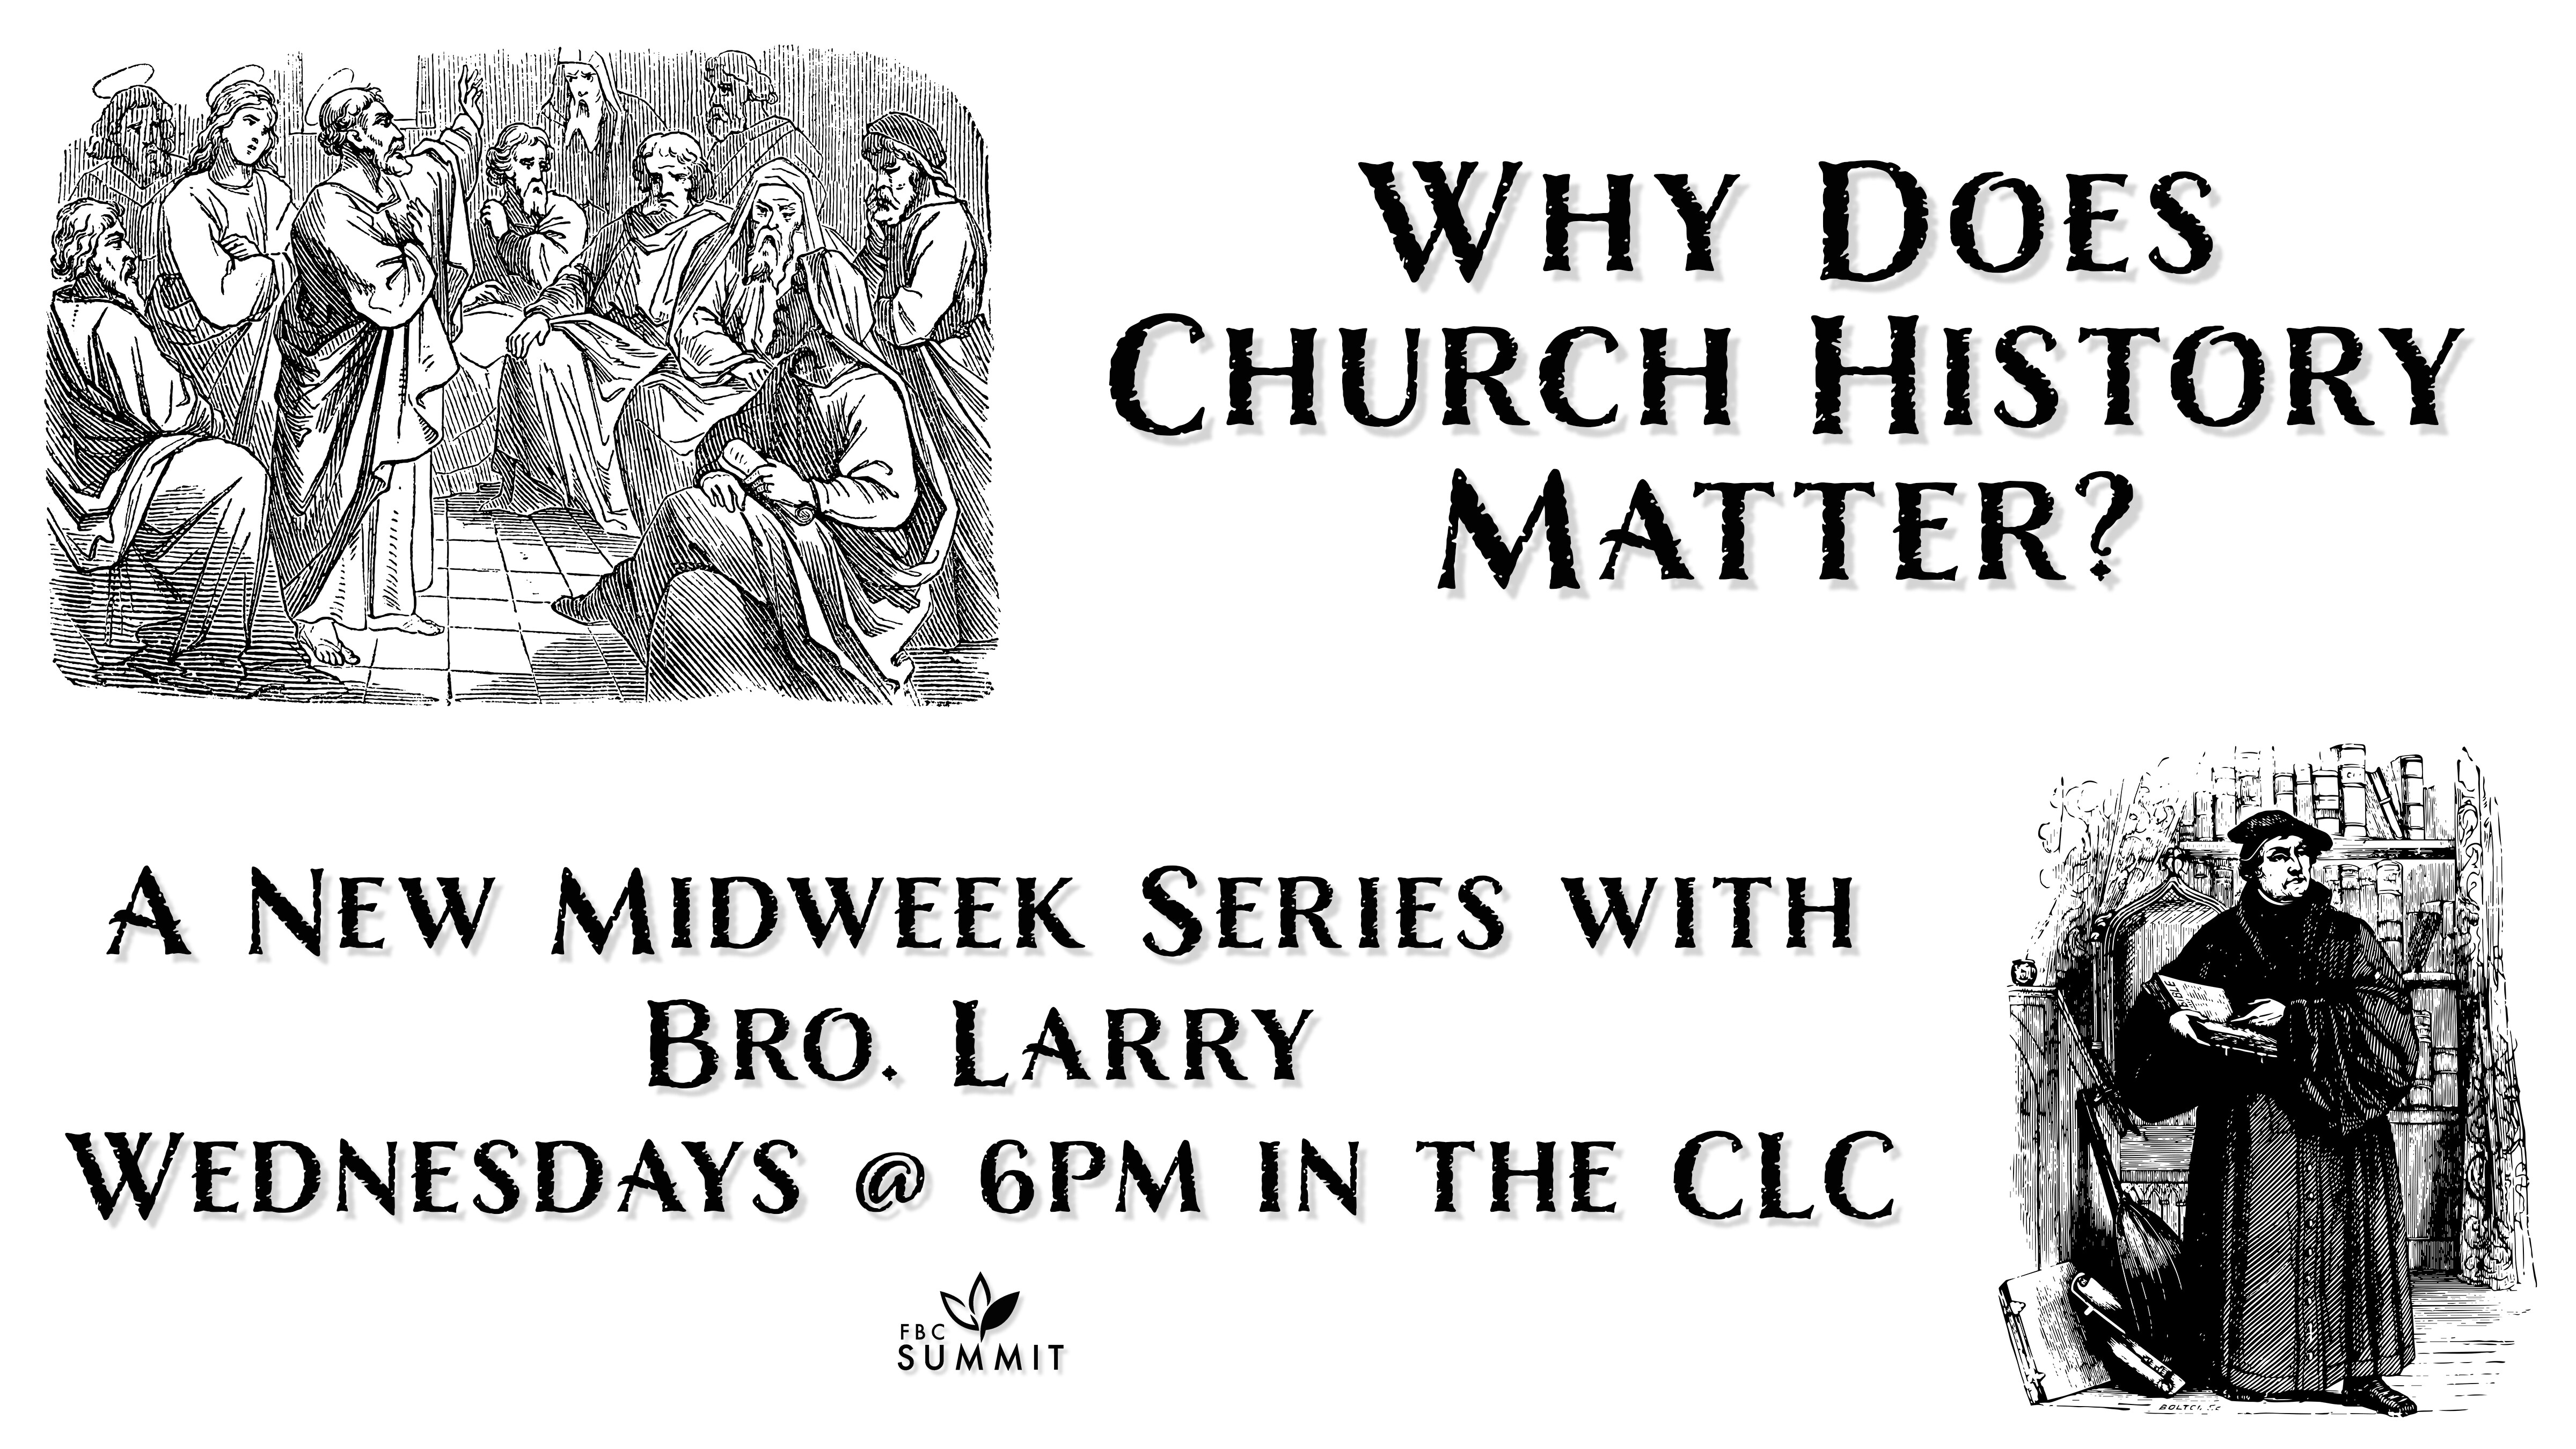 Midweek Bible Study: "Church History 101: The 9th & 10th Centuries" // Dr. Larry LeBlanc